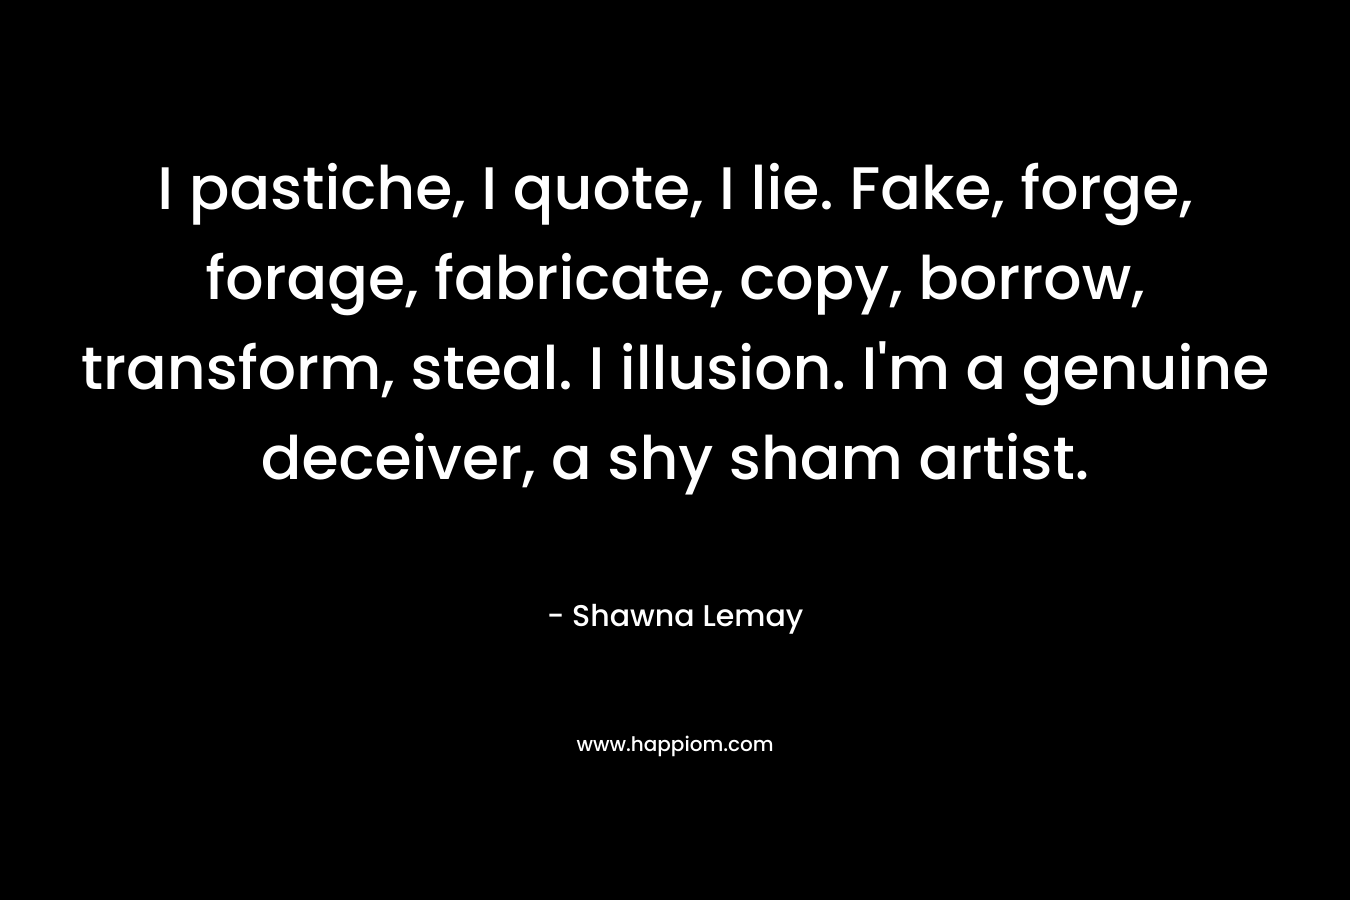 I pastiche, I quote, I lie. Fake, forge, forage, fabricate, copy, borrow, transform, steal. I illusion. I’m a genuine deceiver, a shy sham artist. – Shawna Lemay